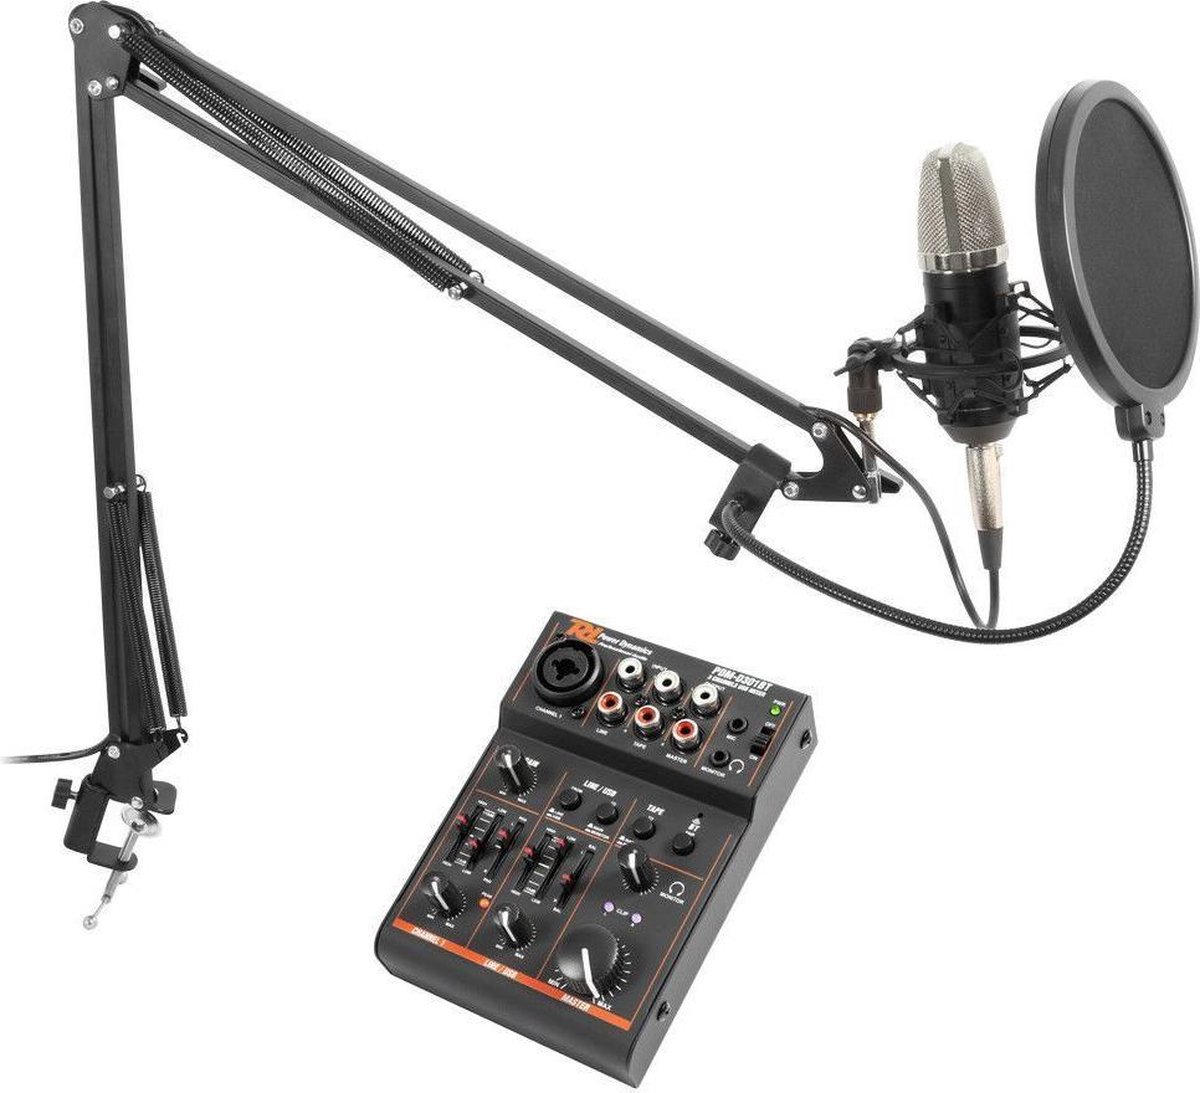 Studiomicrofoon voor pc / laptop - Vonyx studiomicrofoon met broadcast arm, shockmount, po